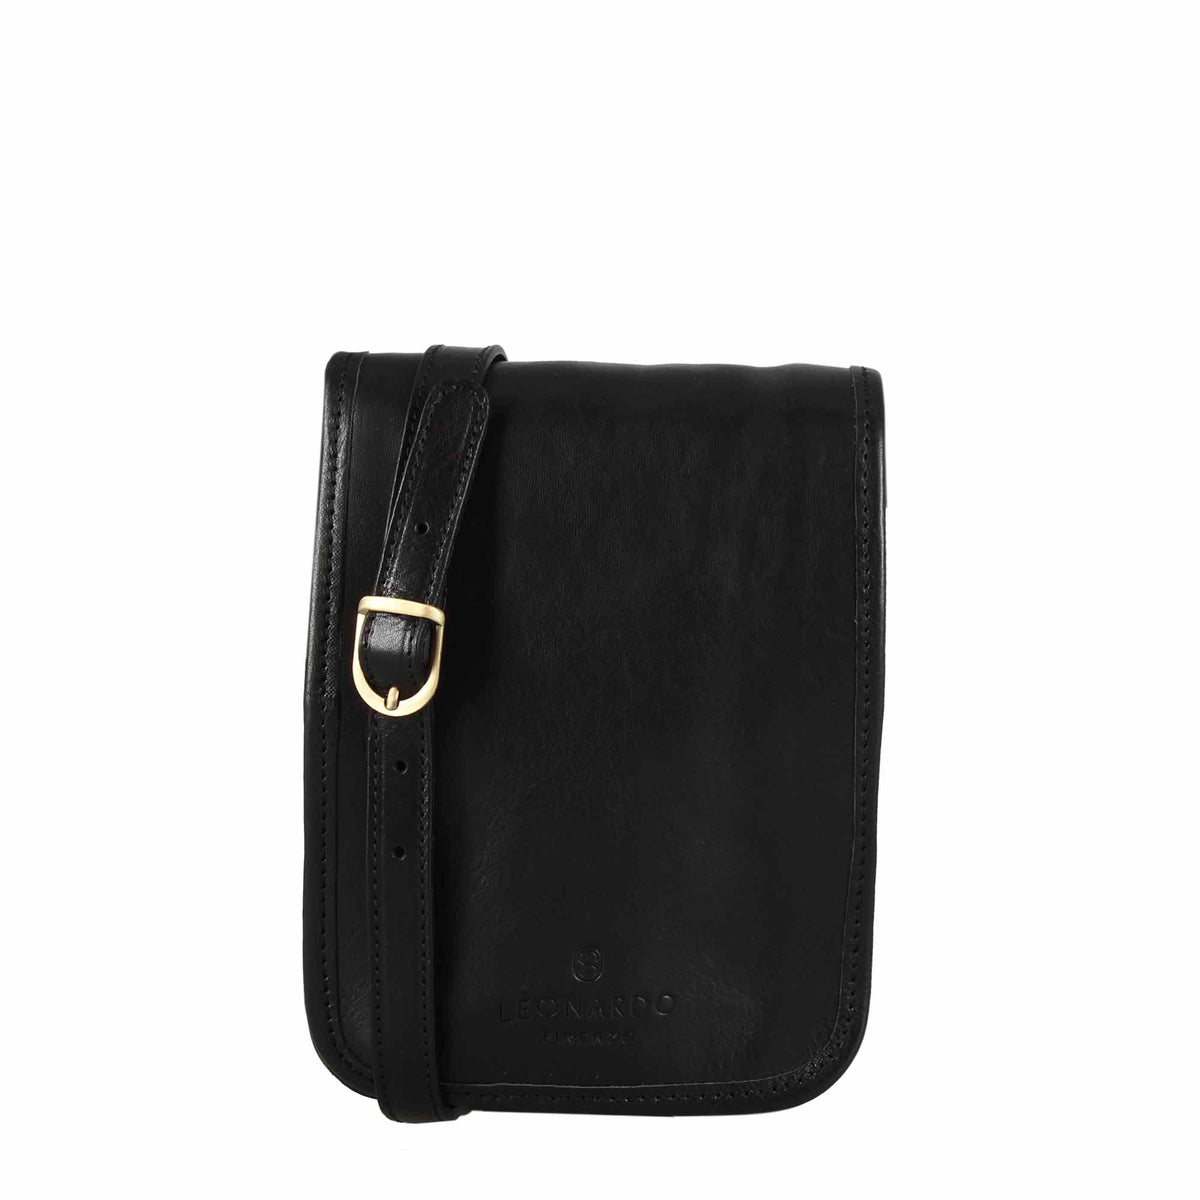 Medium black leather men's purse